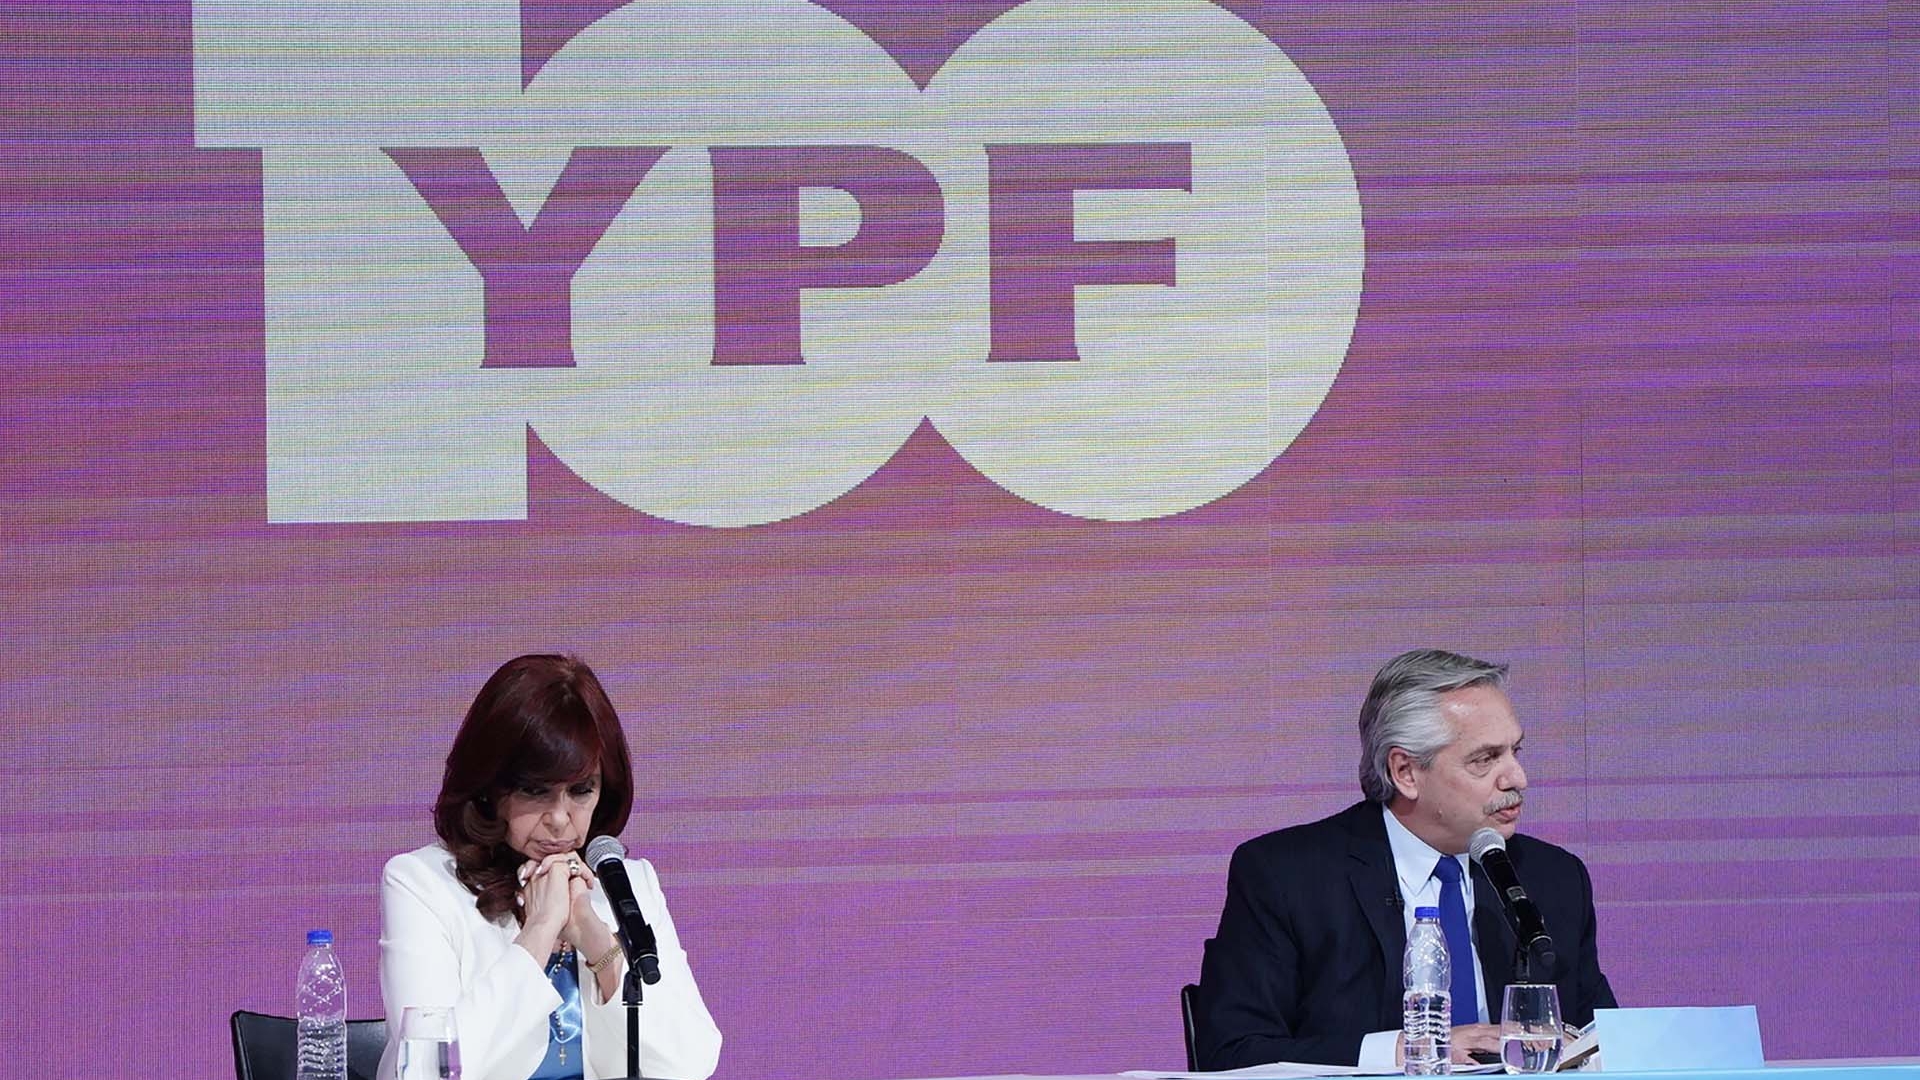 Alberto Fernández y Cristina Fernández de Kirchner comparten un acto oficial de YPF en Tecnópolis